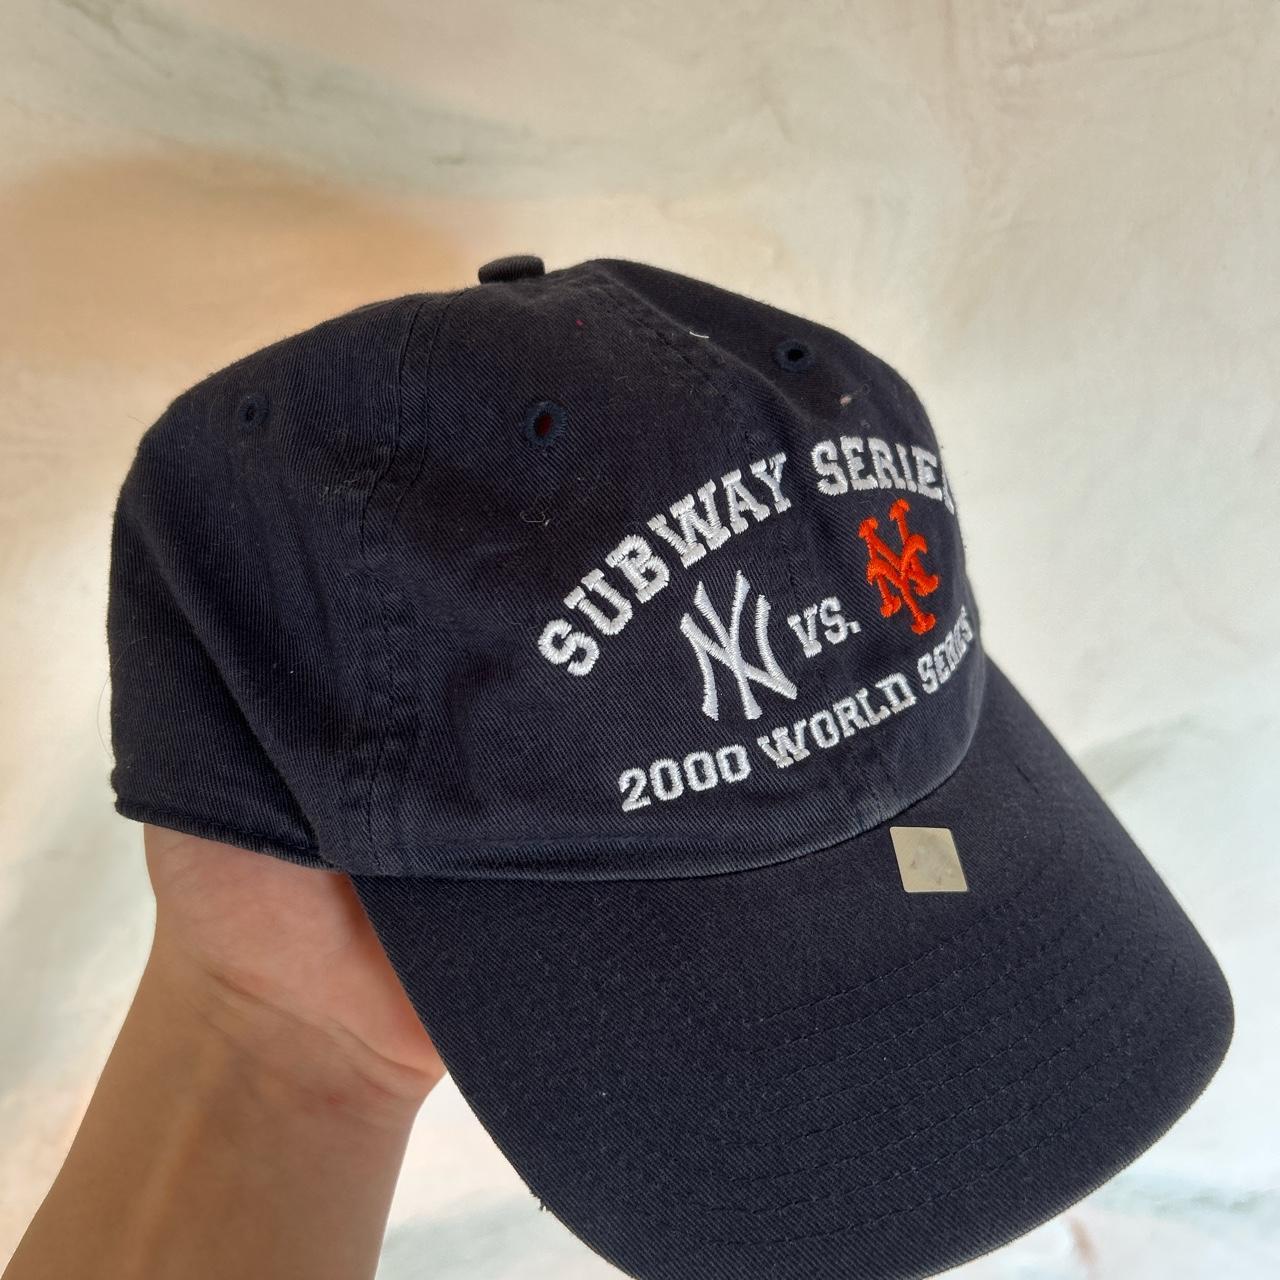 2000 Subway Series Mets vs. Yankees cap. Very good...